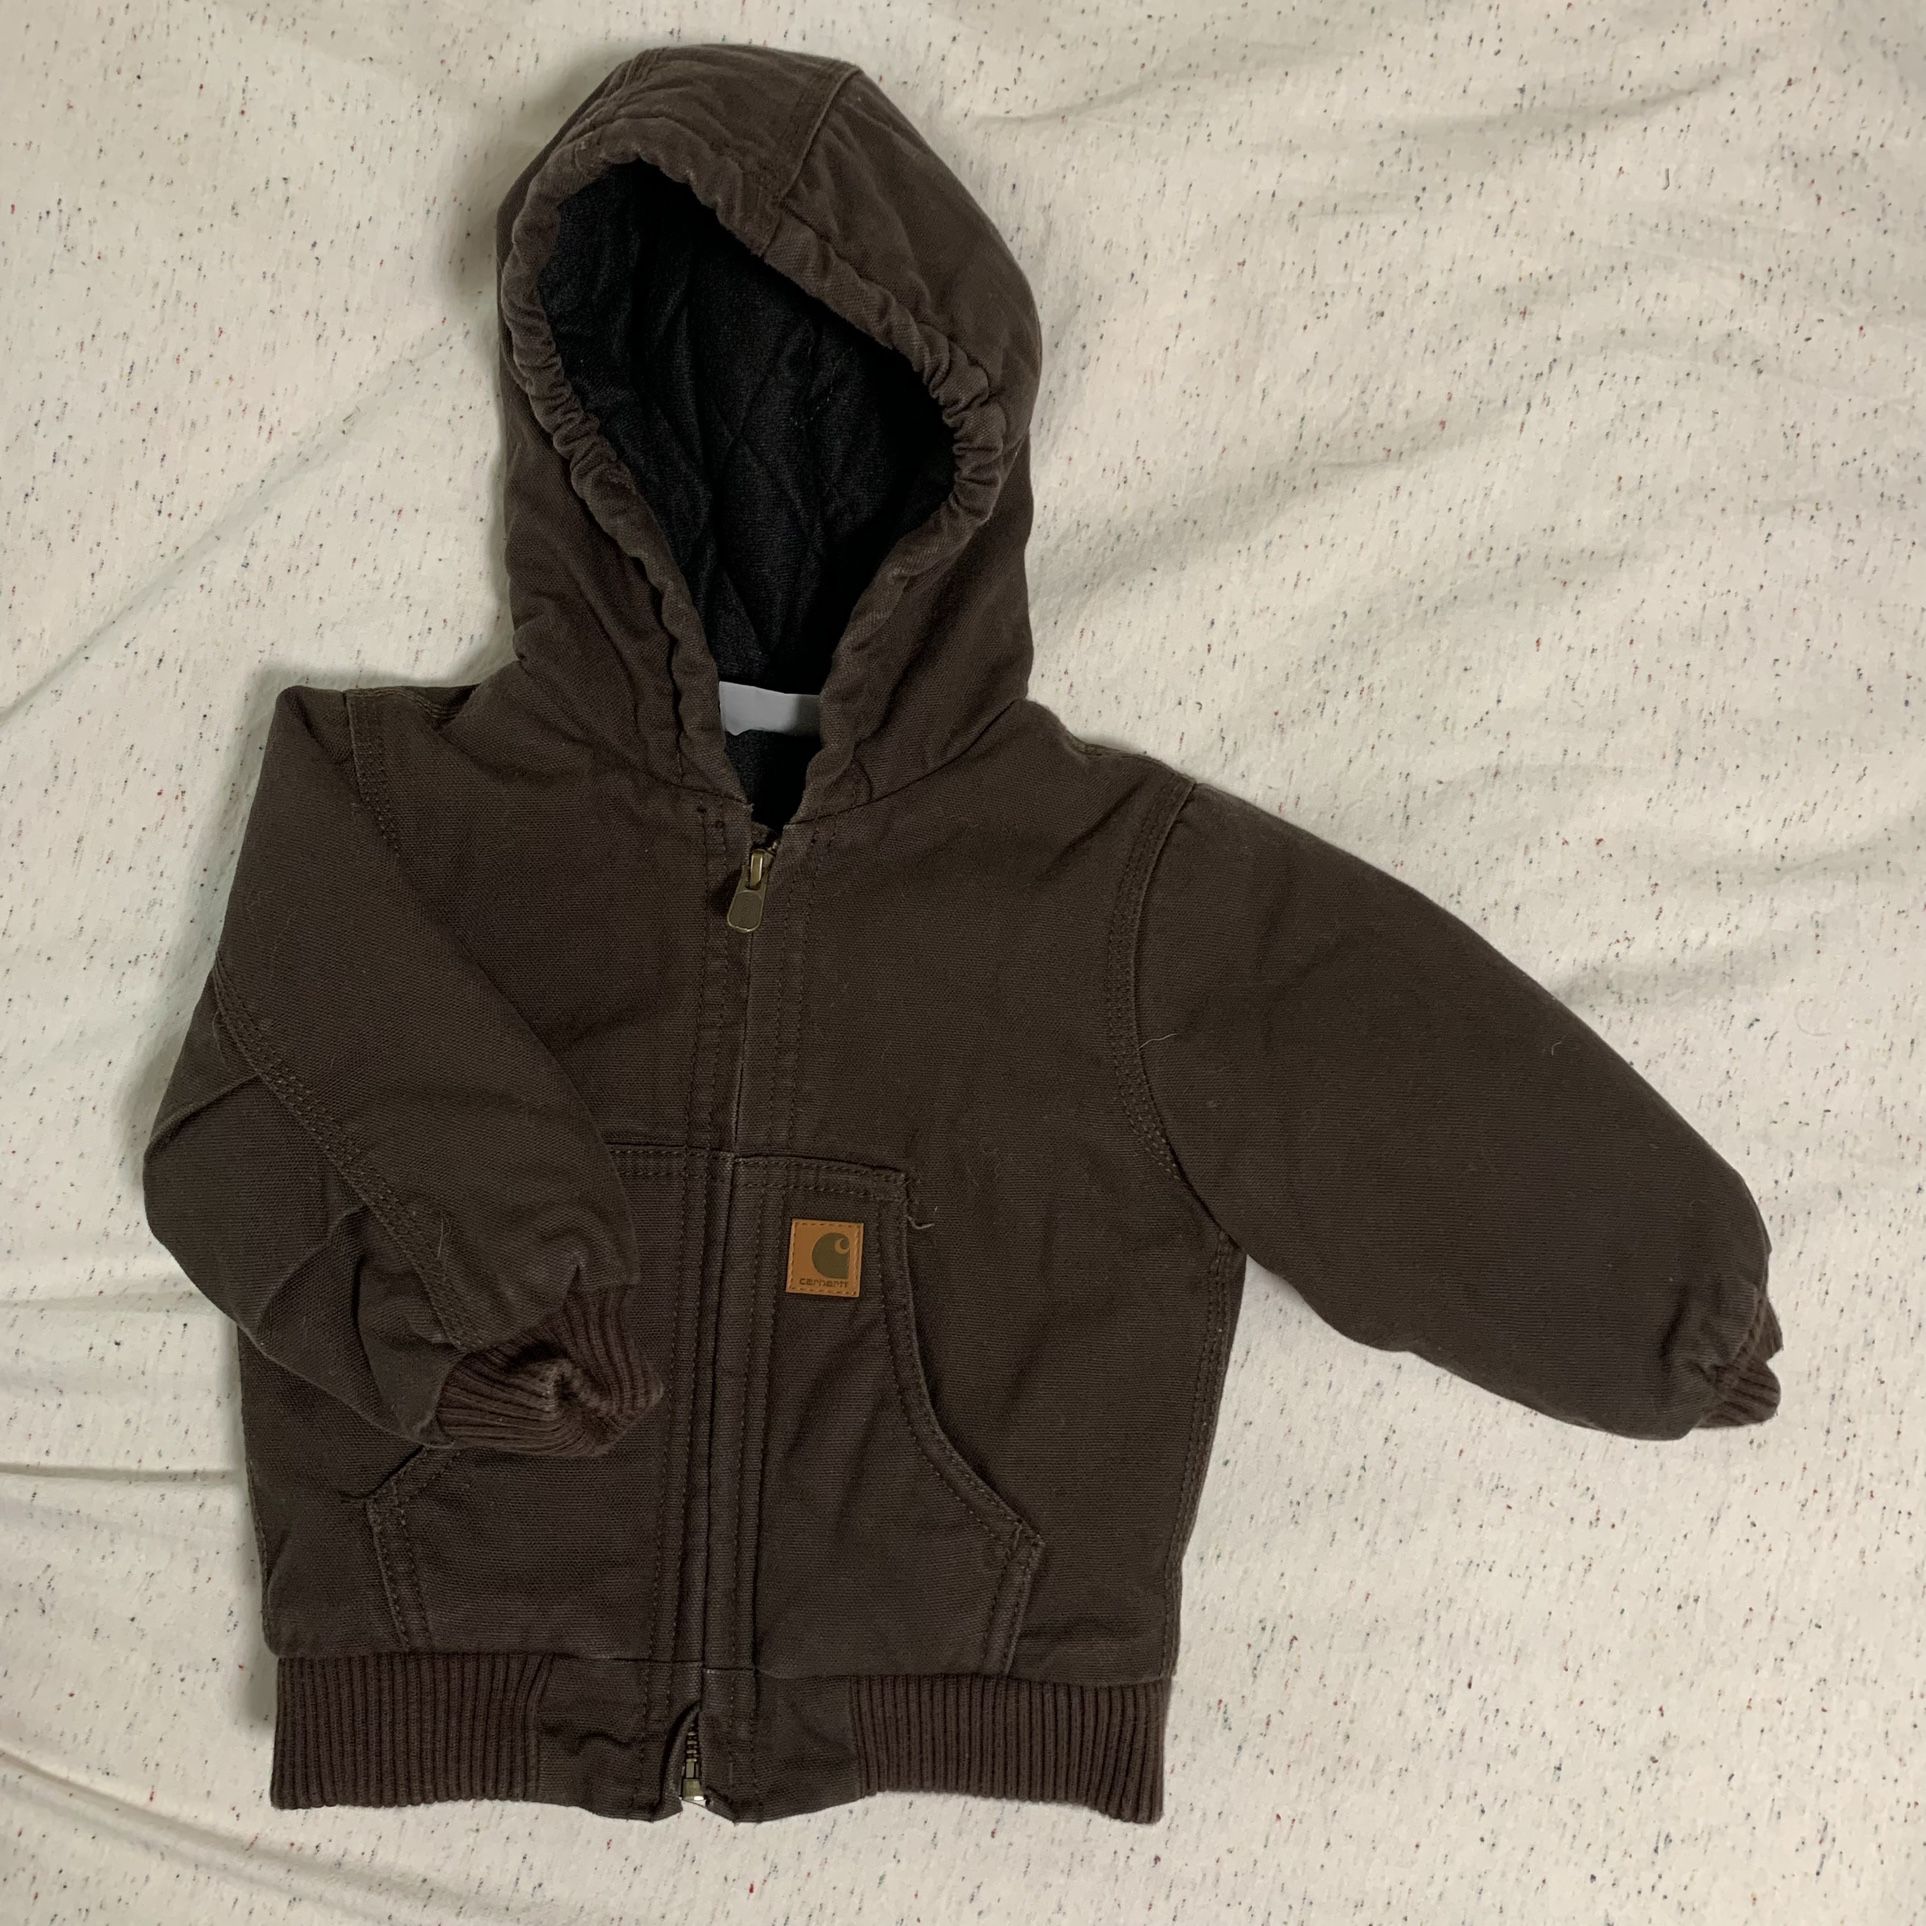 Carhartt Baby Boy Jacket